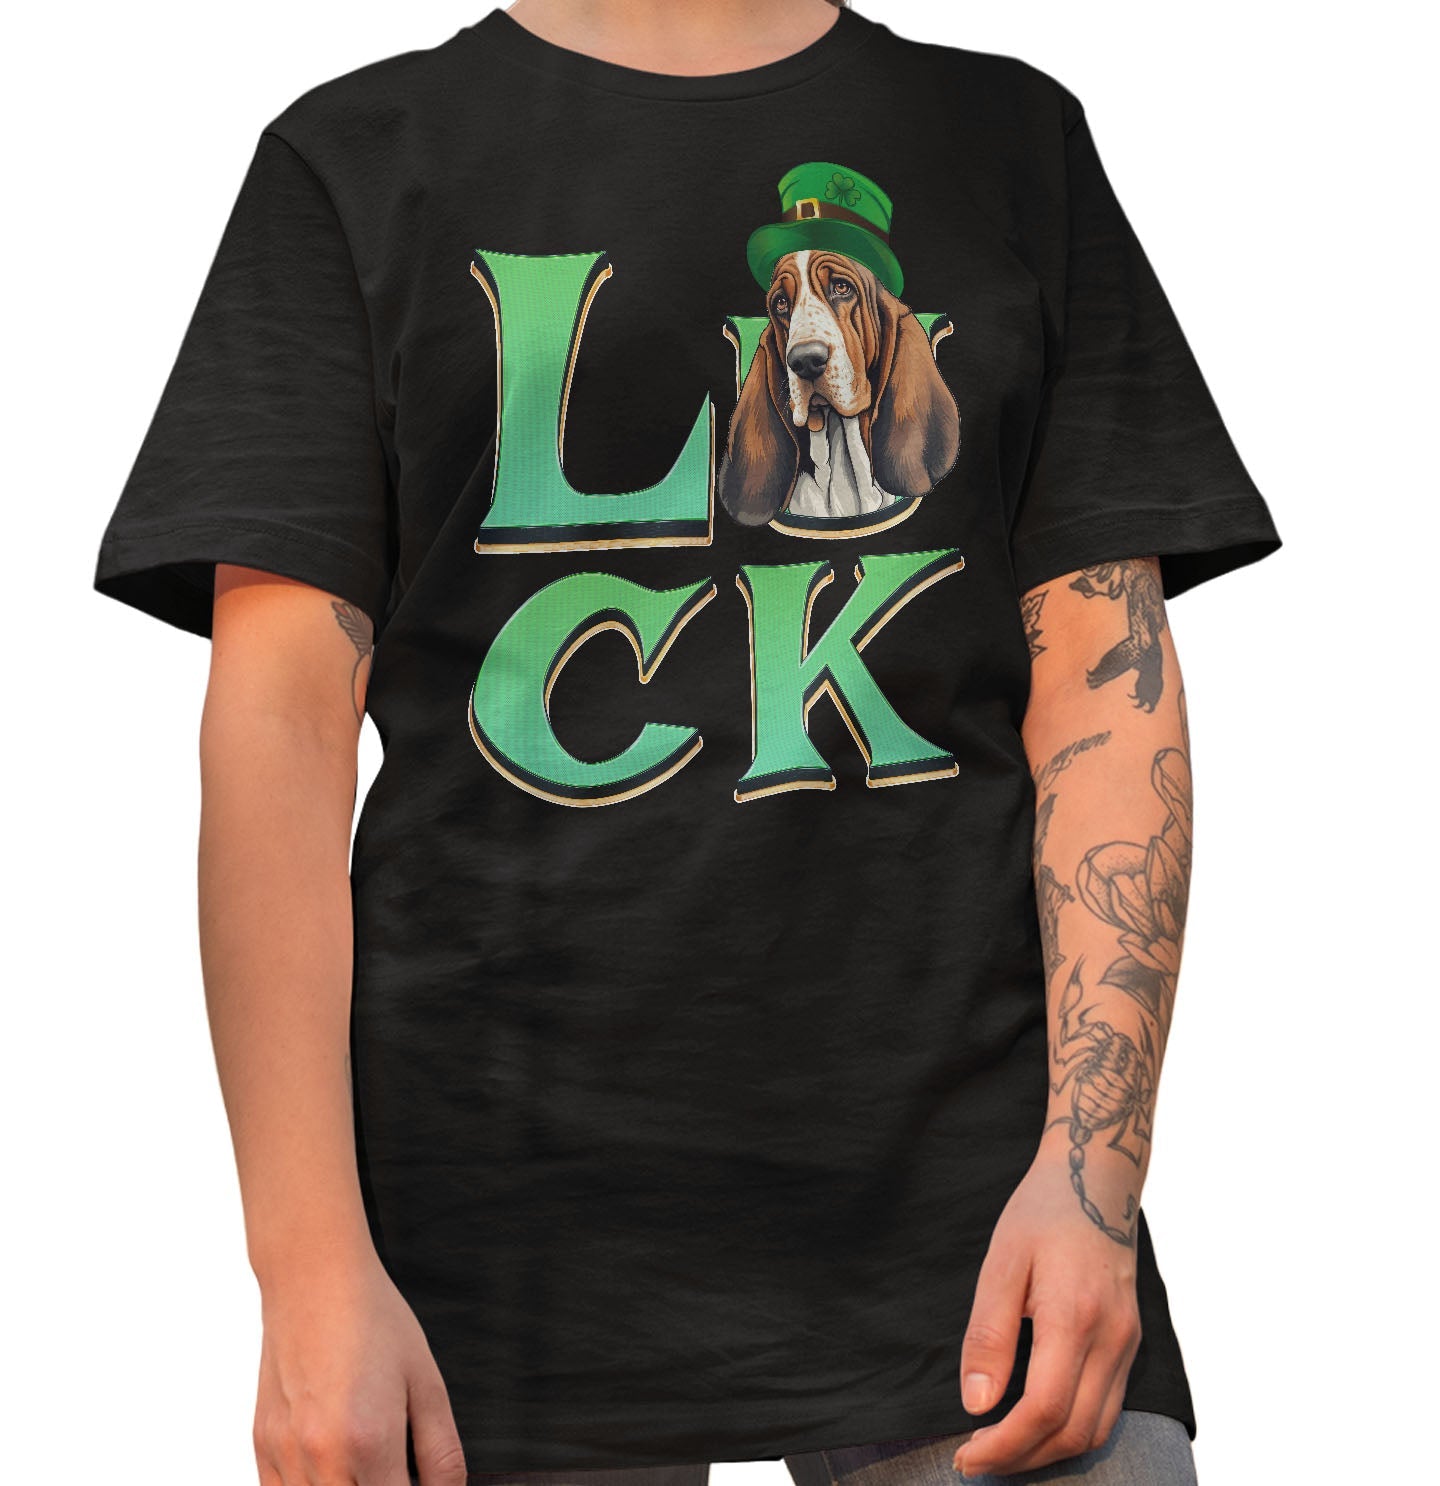 Big LUCK St. Patrick's Day Basset Hound - Adult Unisex T-Shirt